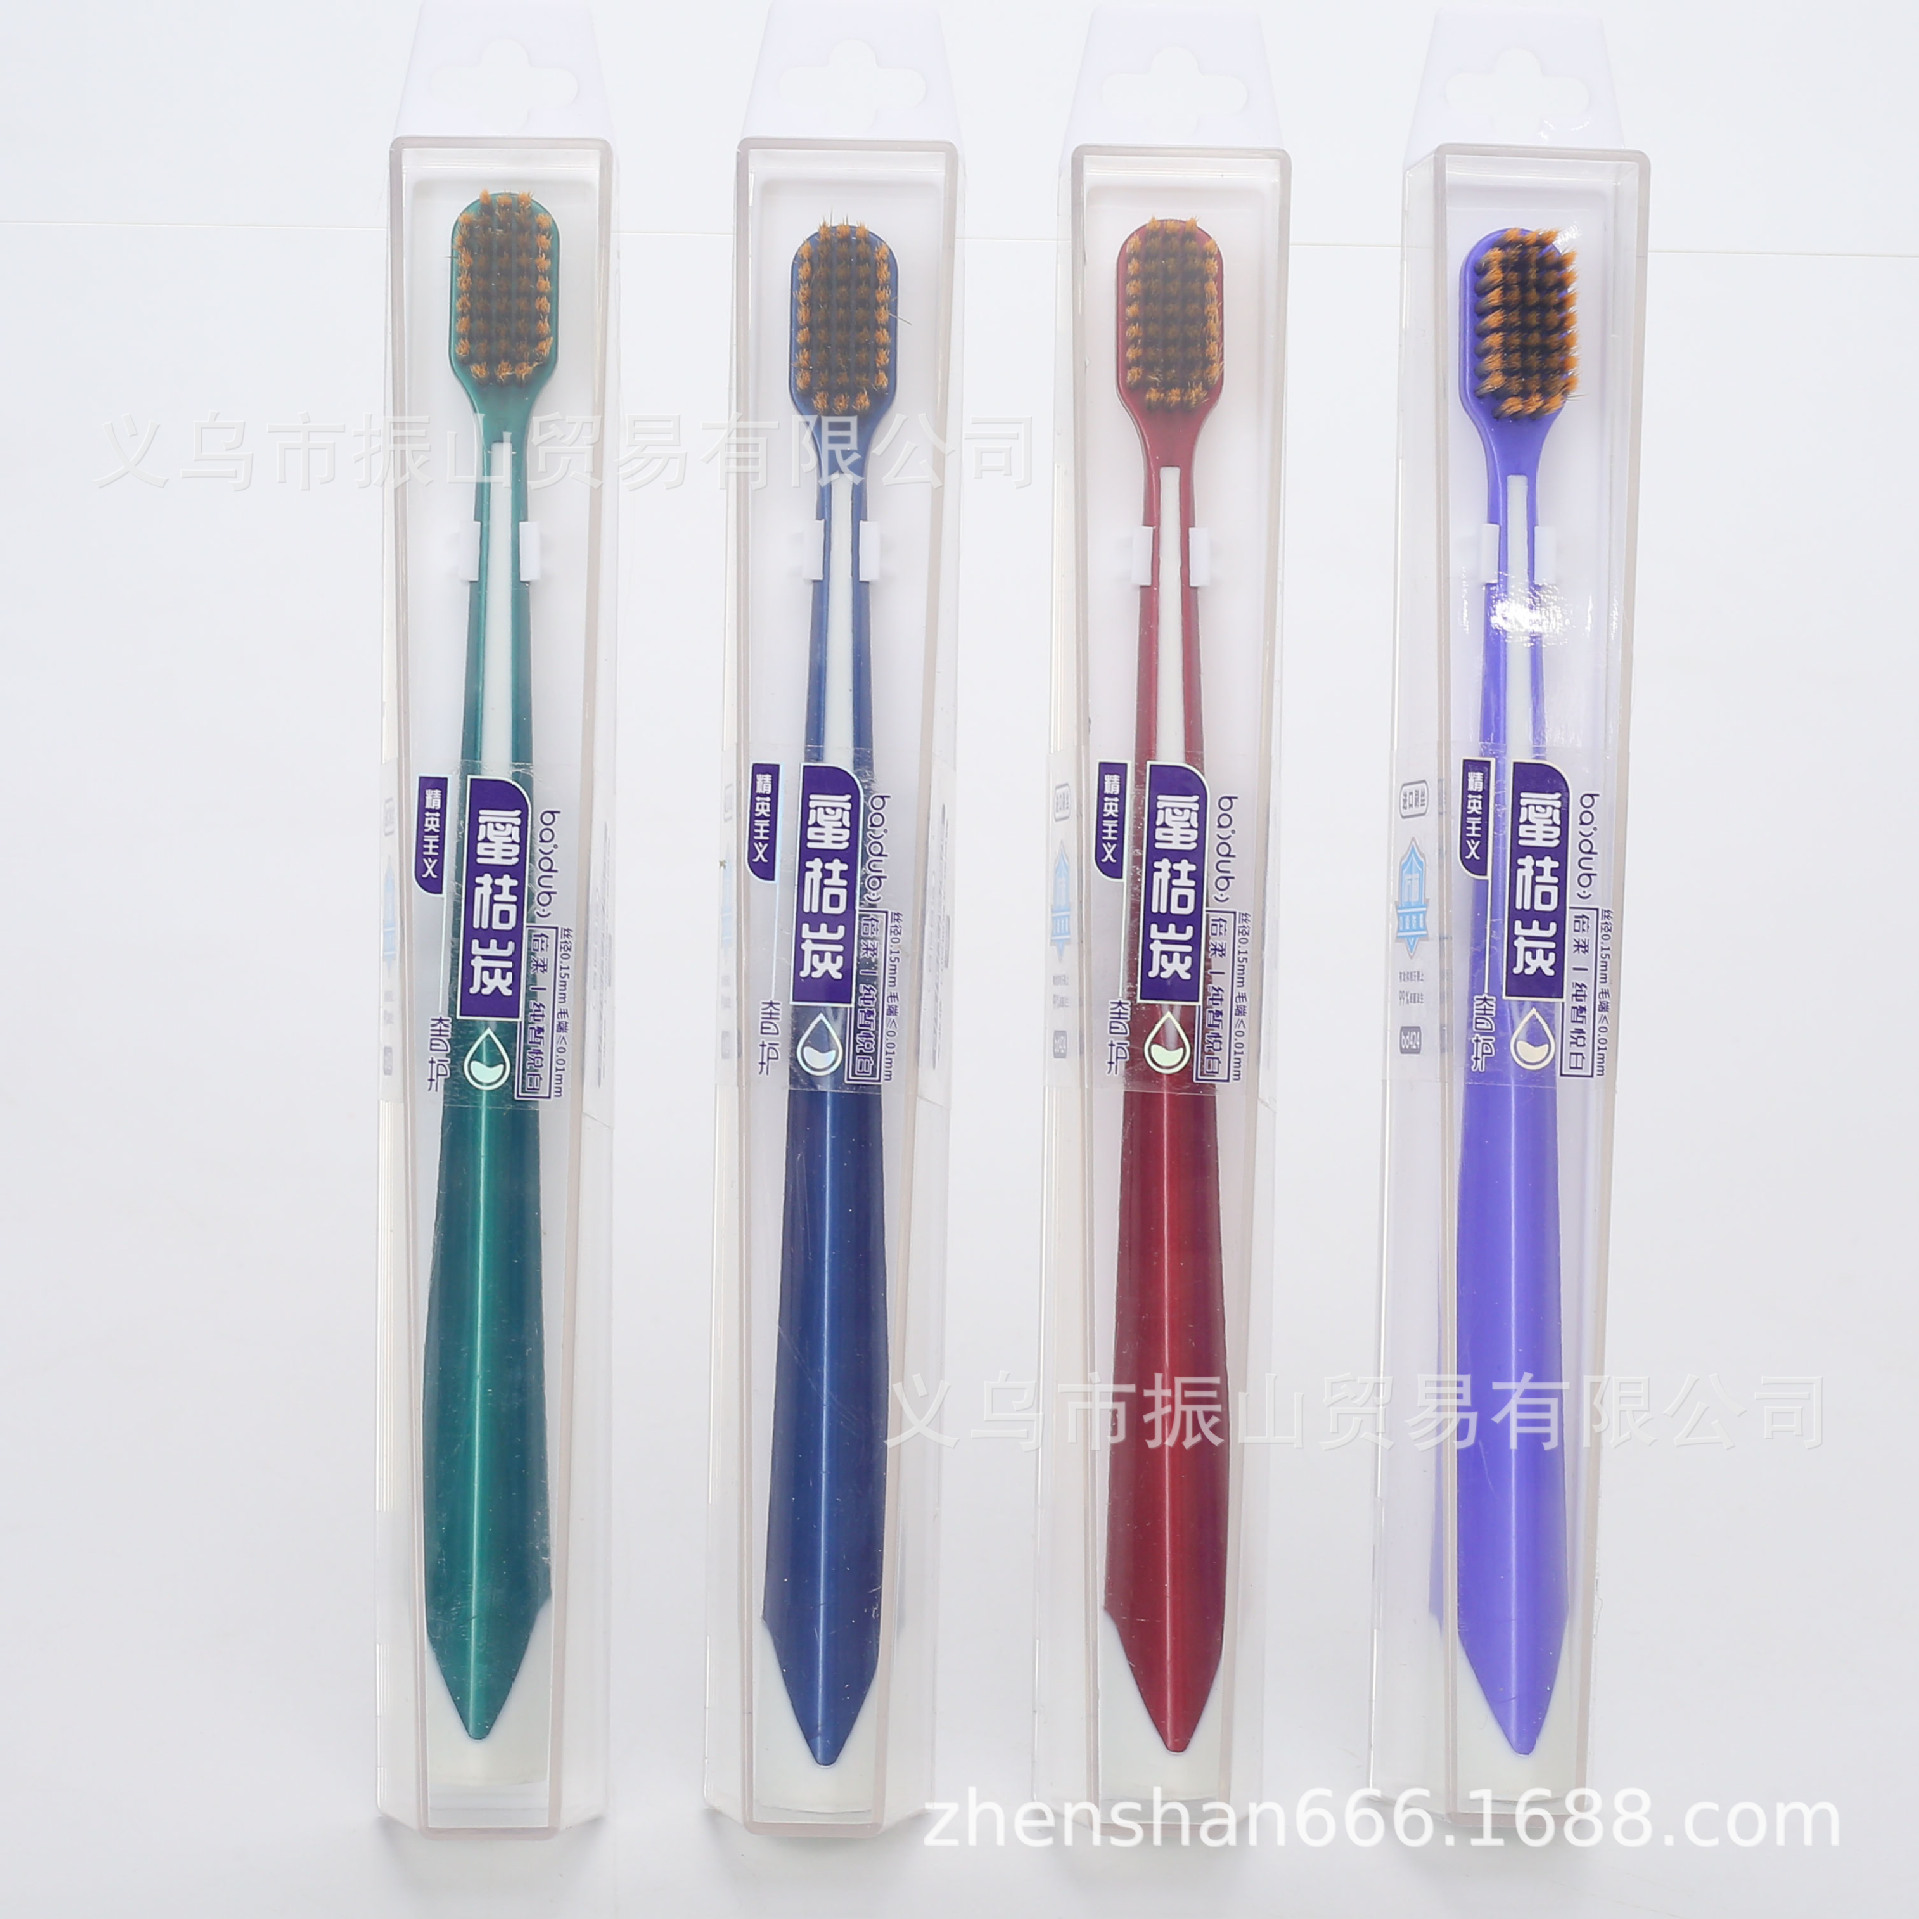 baidubj 424 elitism pure temporary yue bai beirou tangerine charcoal soft-bristle toothbrush